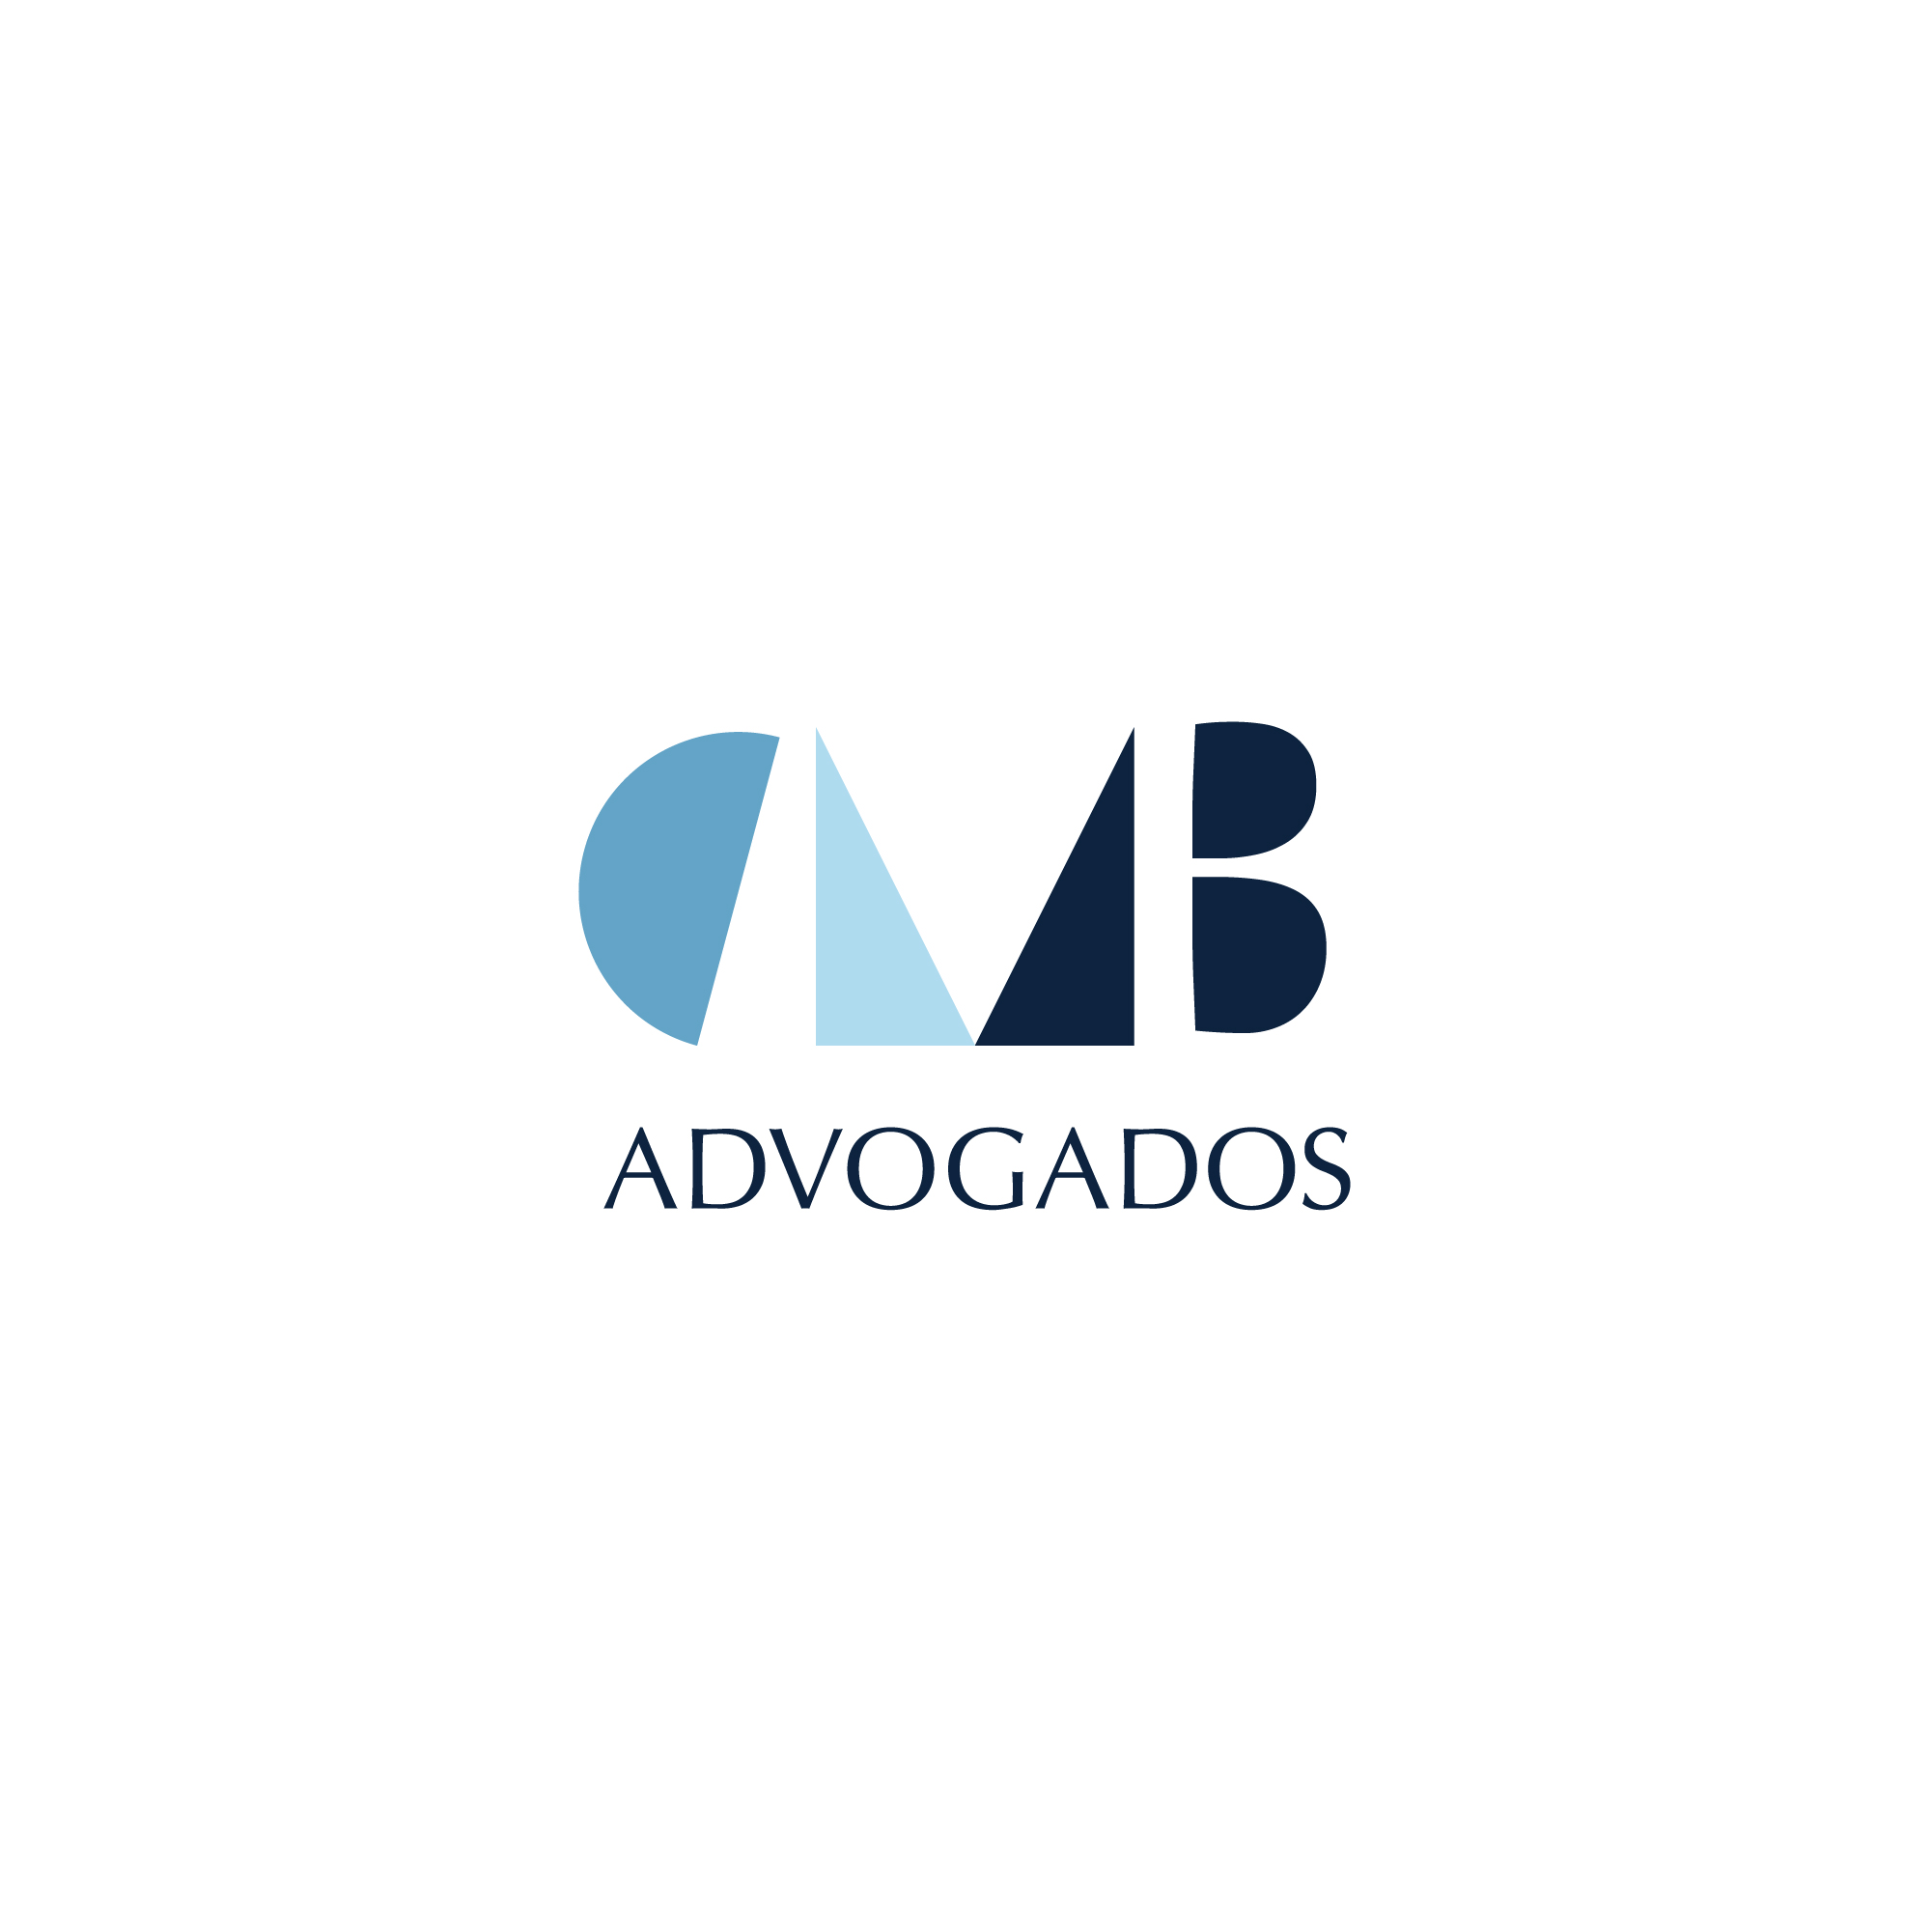 CMB ADVOGADOS - lettering (2021)